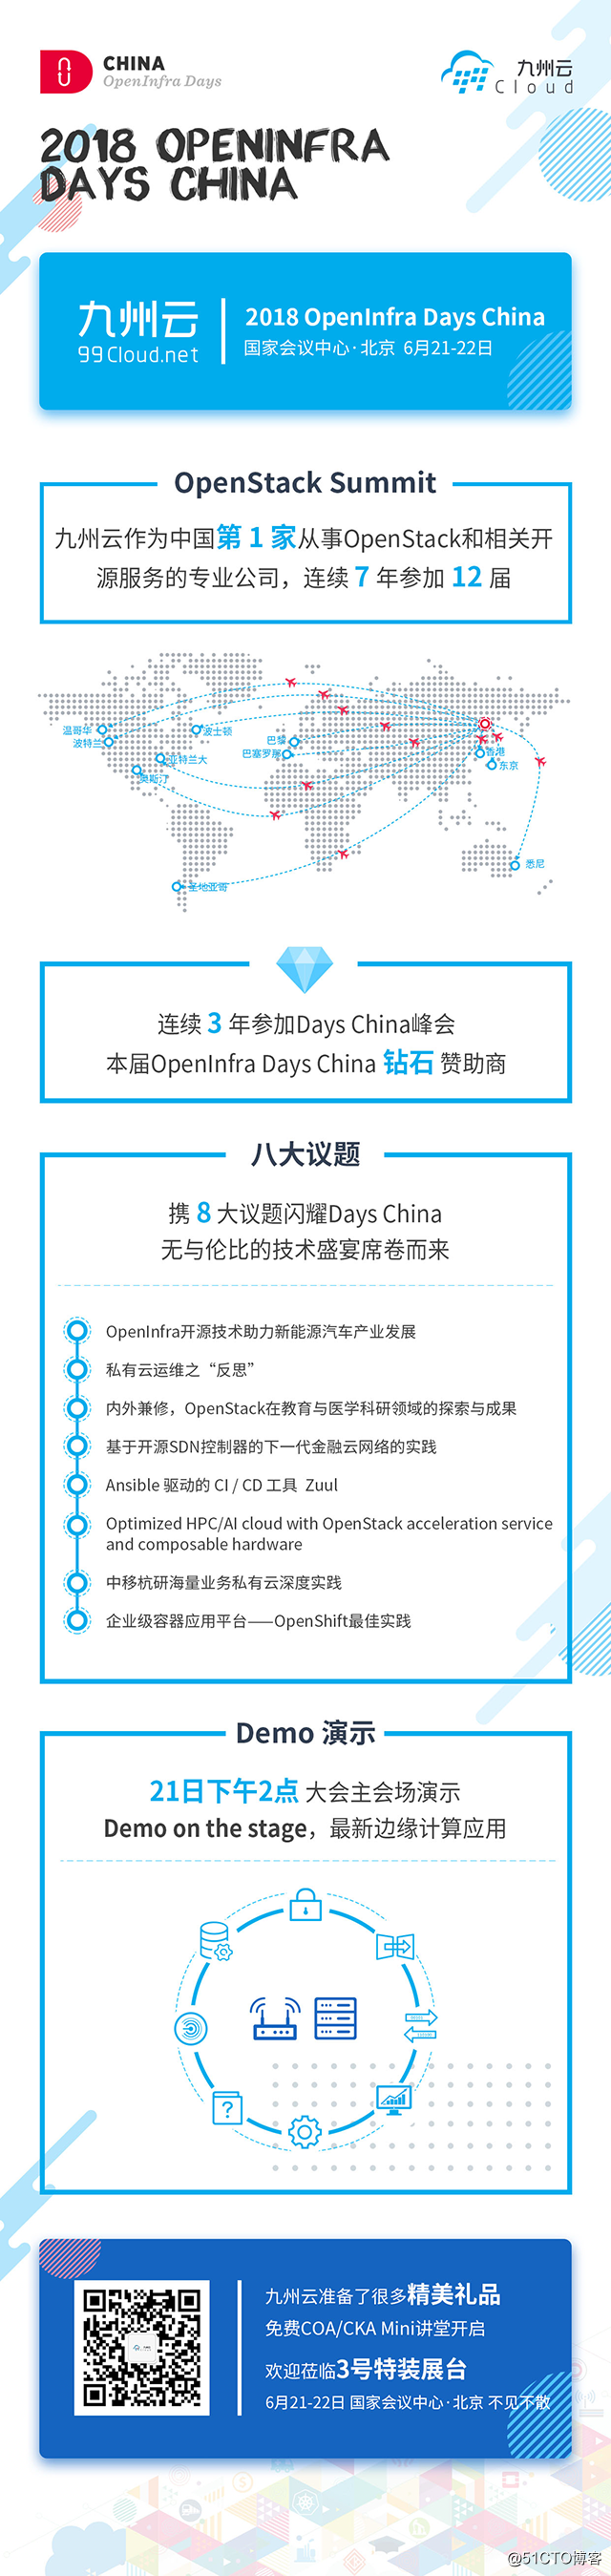 2018 OpenInfra Days China，九州雲強勢來襲!